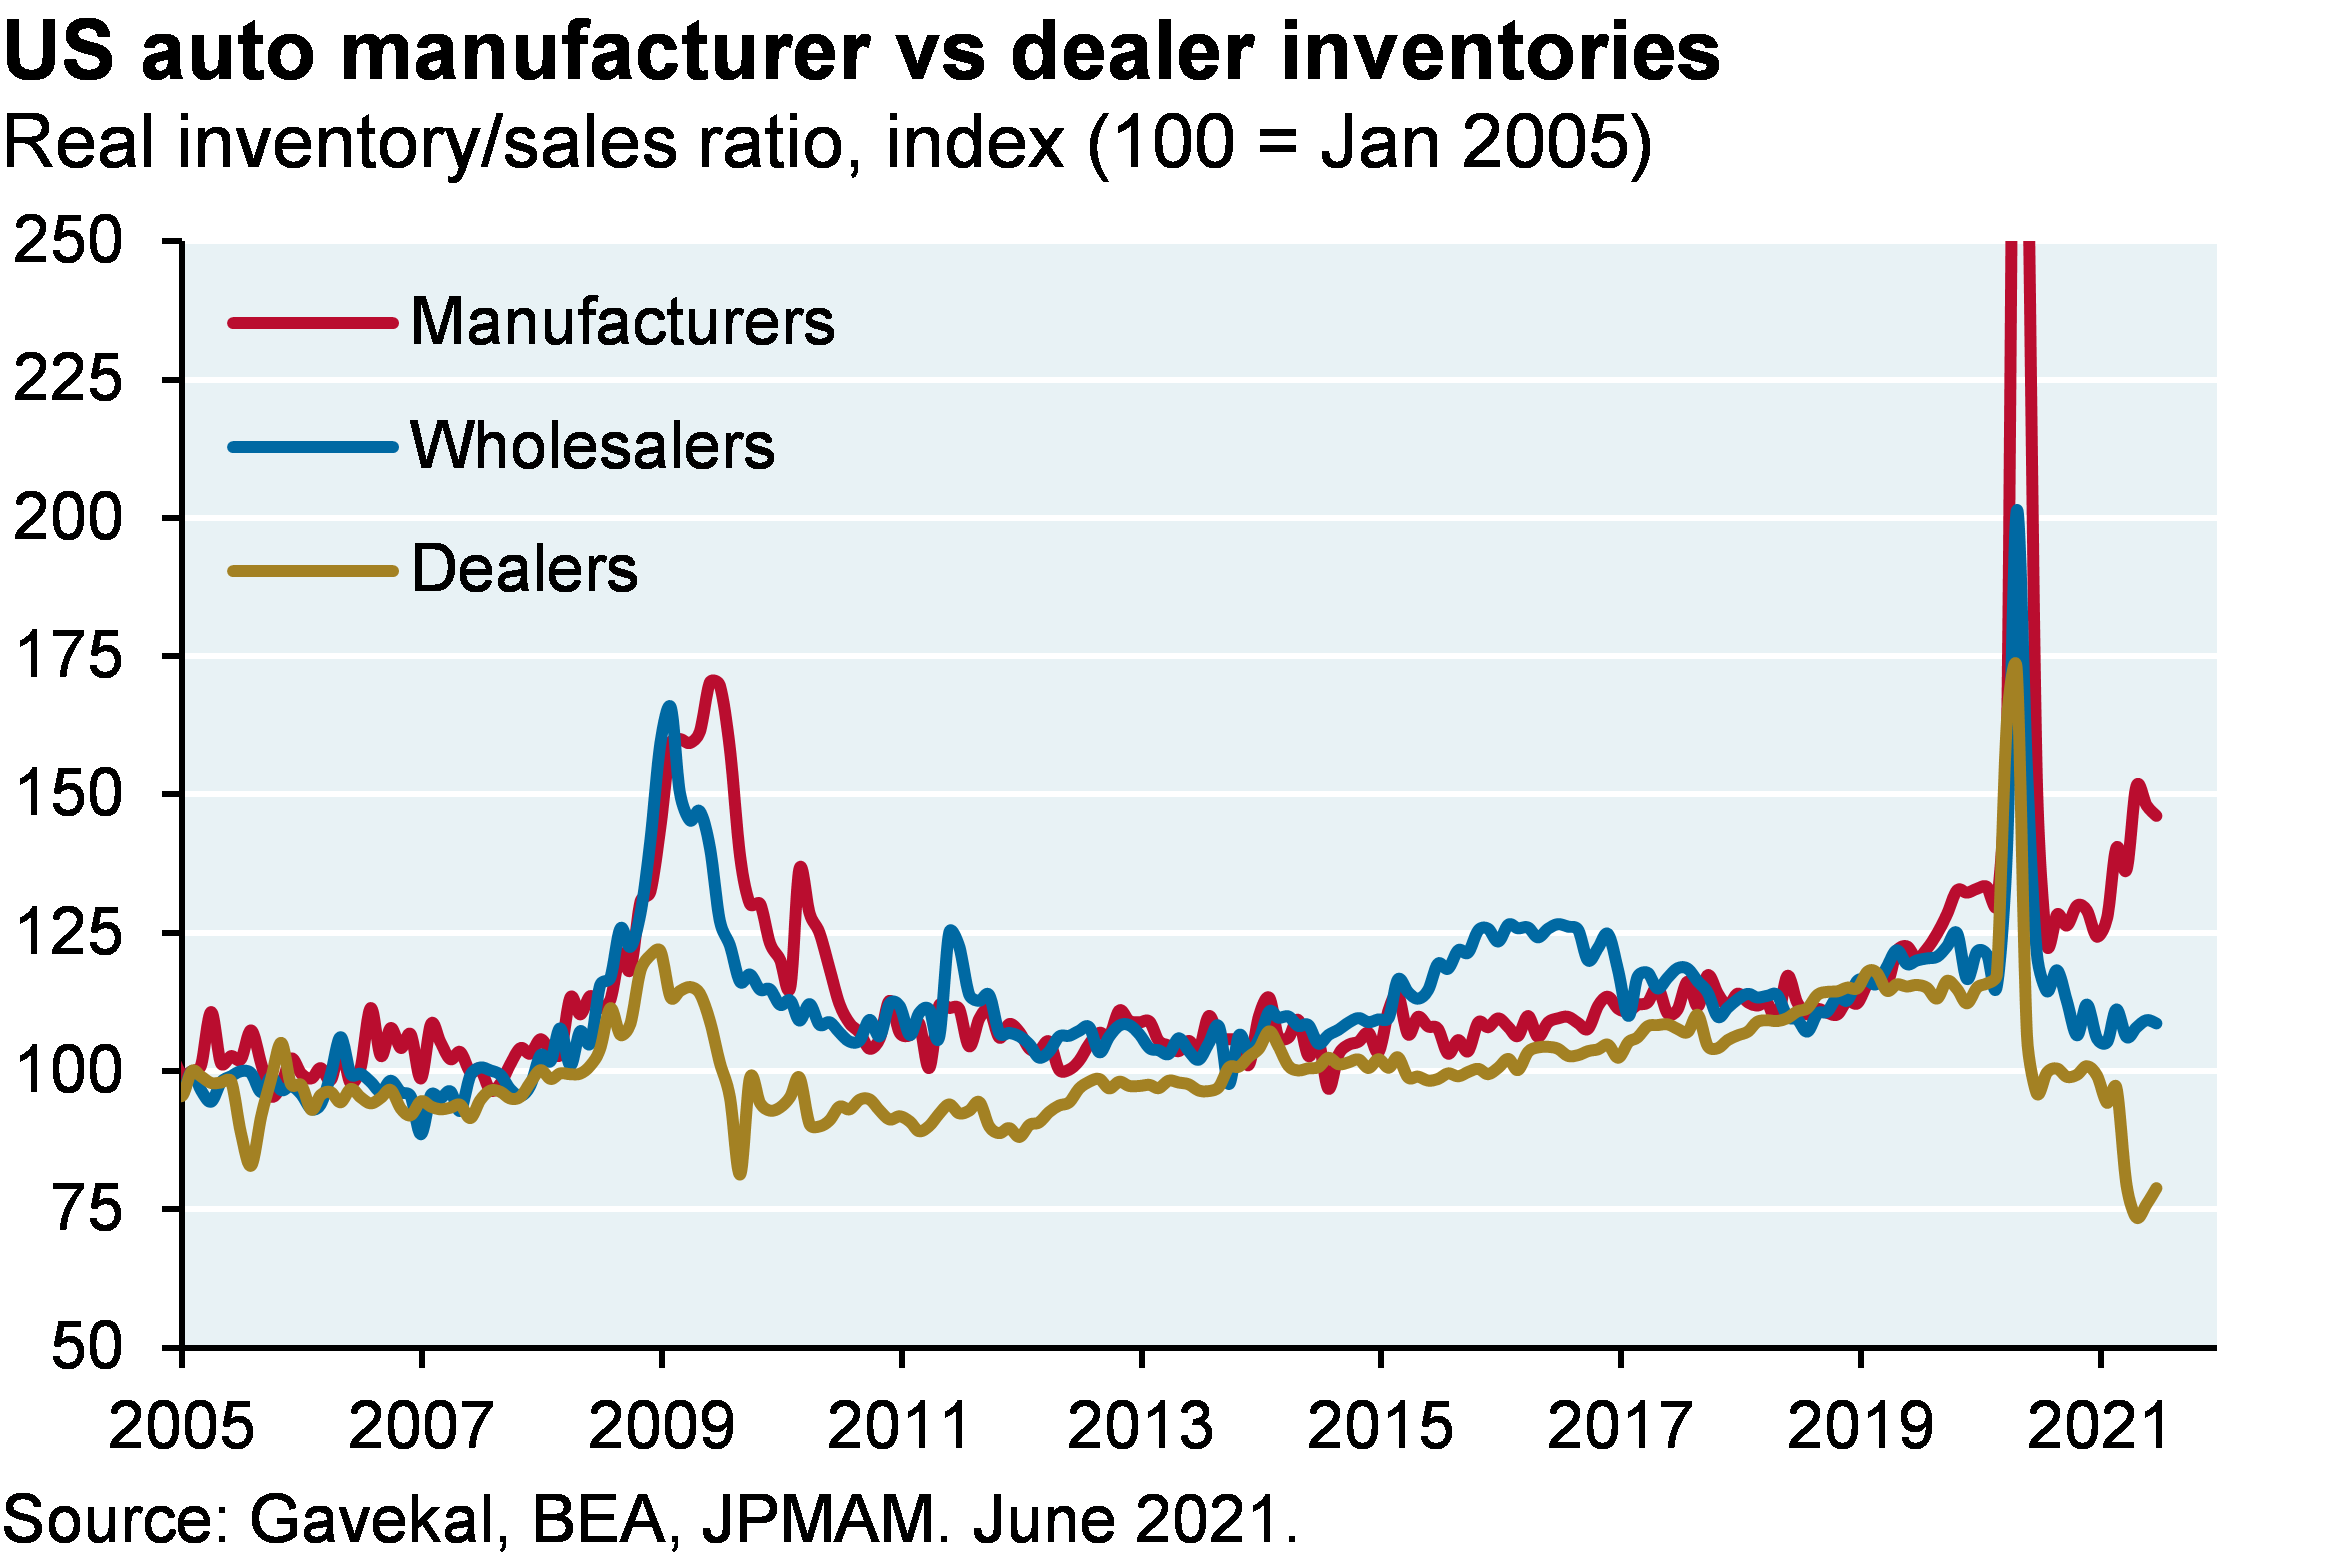 US auto manufacturer vs dealer inventories